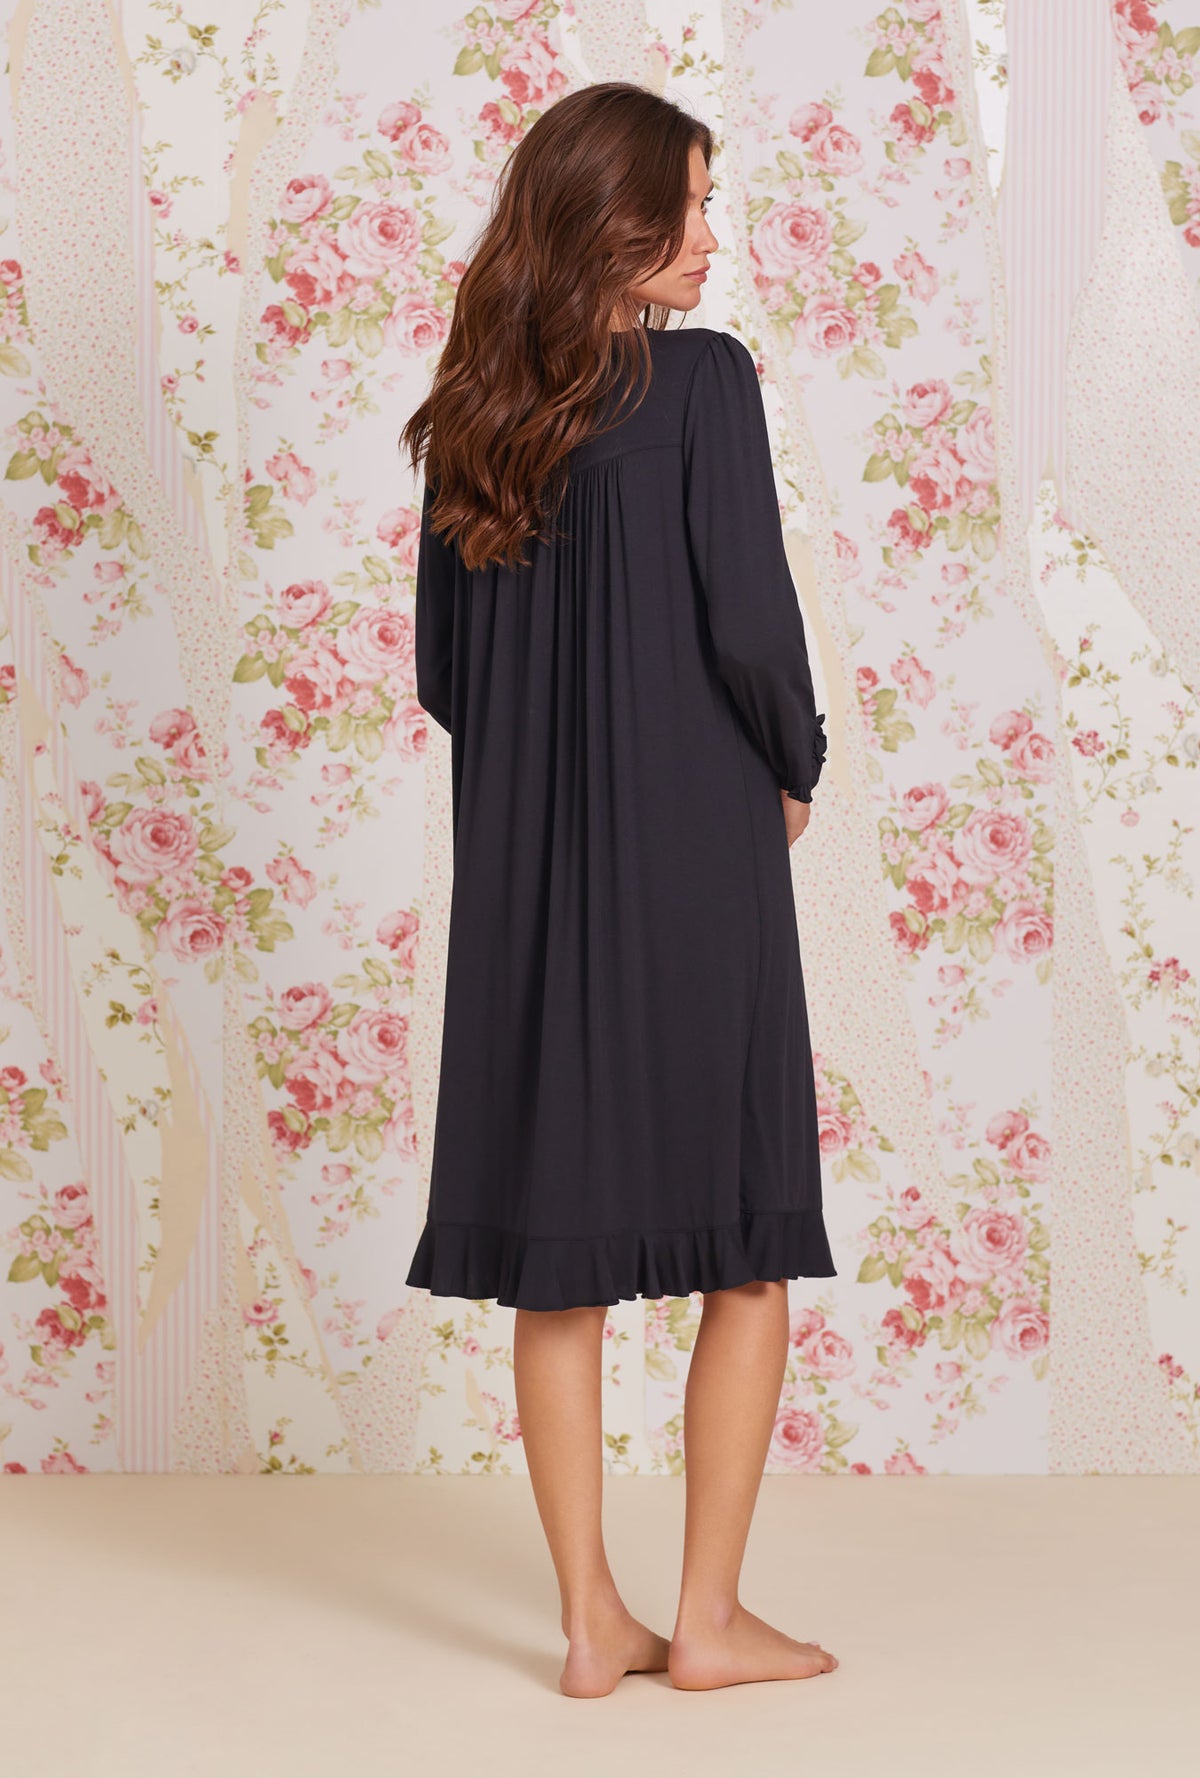 Iconic Black Tencel™ Modal Long Sleeve Waltz Nightgown